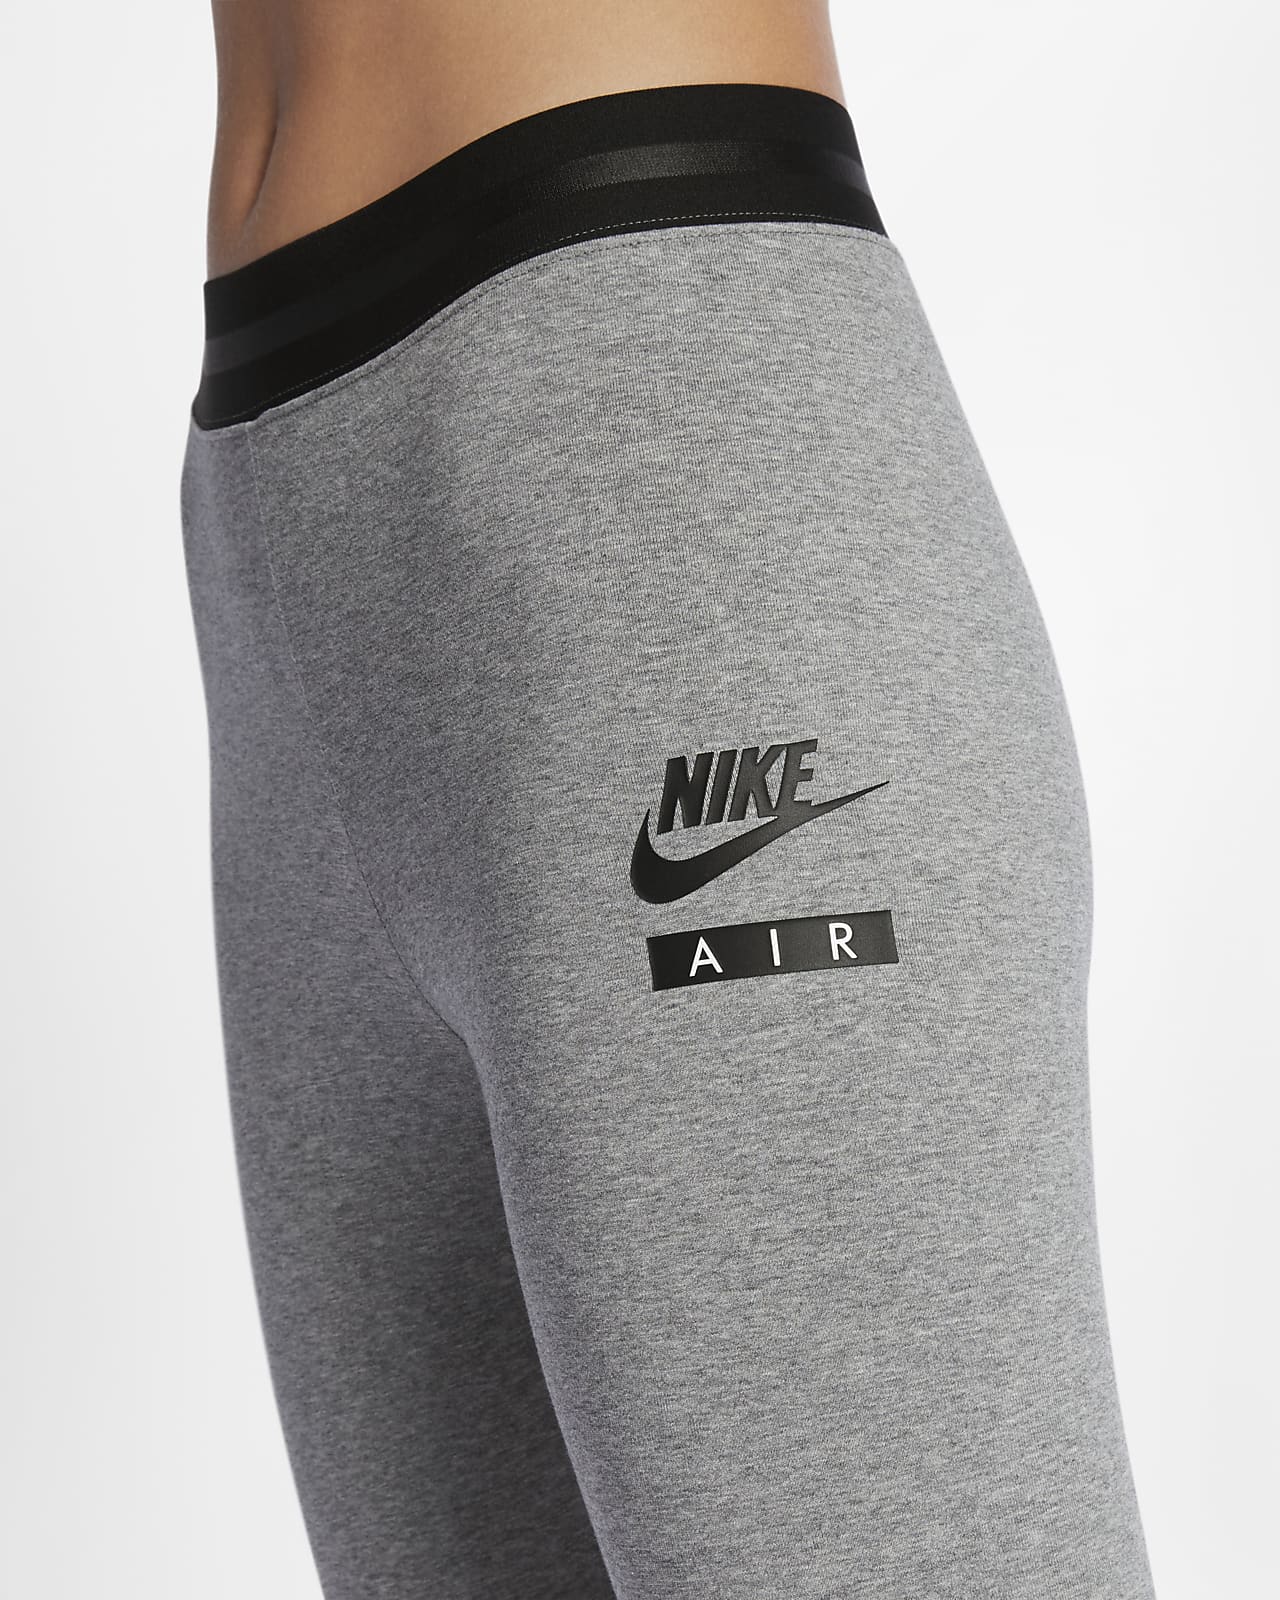 Nike Air ribbed leggings in black